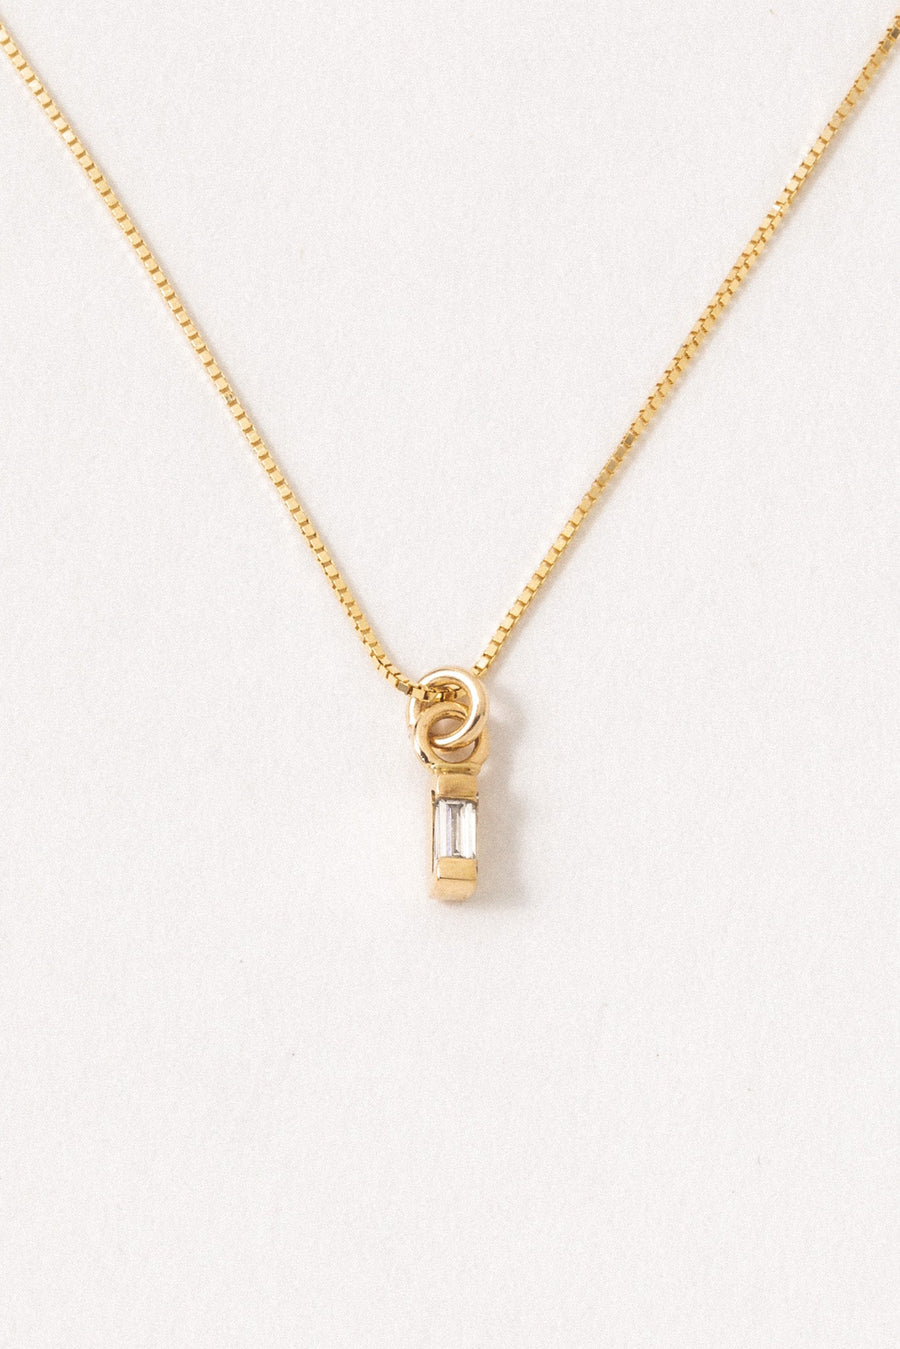 Stuller Jewelry Gold / 16 Inches 14kt Khalo Single Diamond Necklace